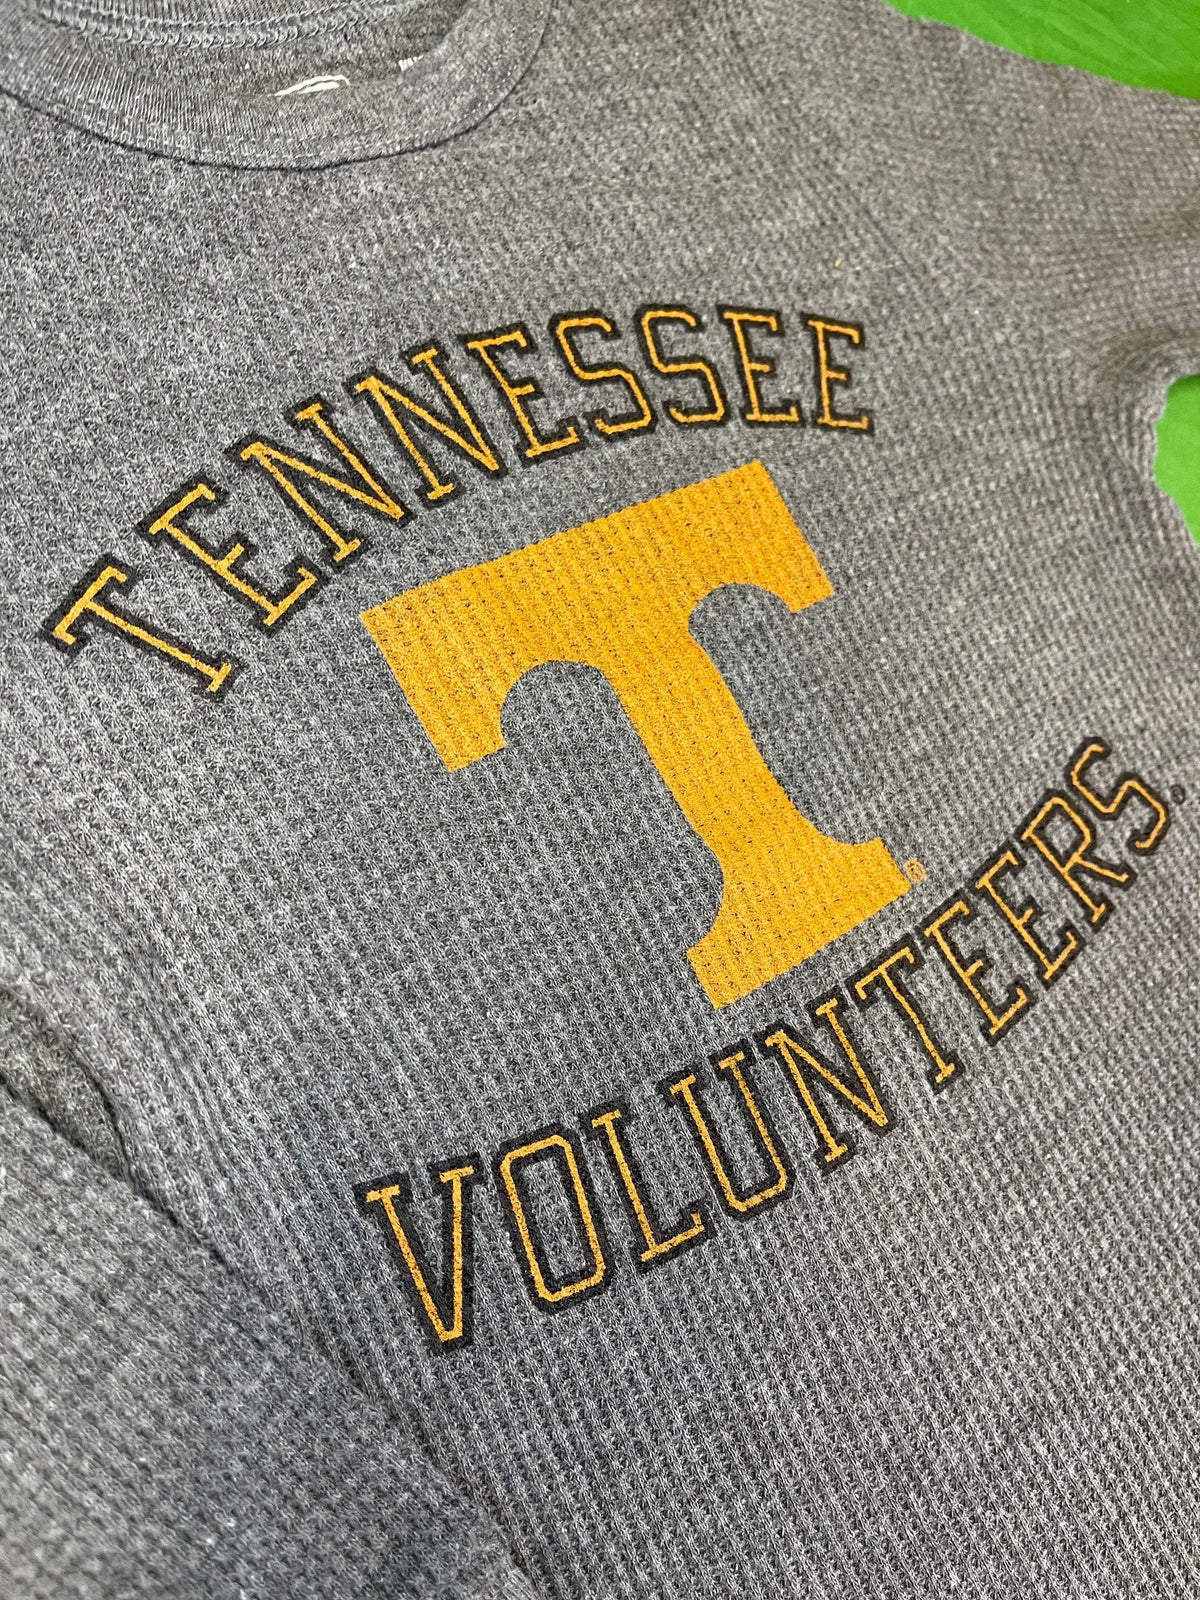 NCAA Tennessee Volunteers Grey Long-Sleeve T-Shirt Toddler 3T